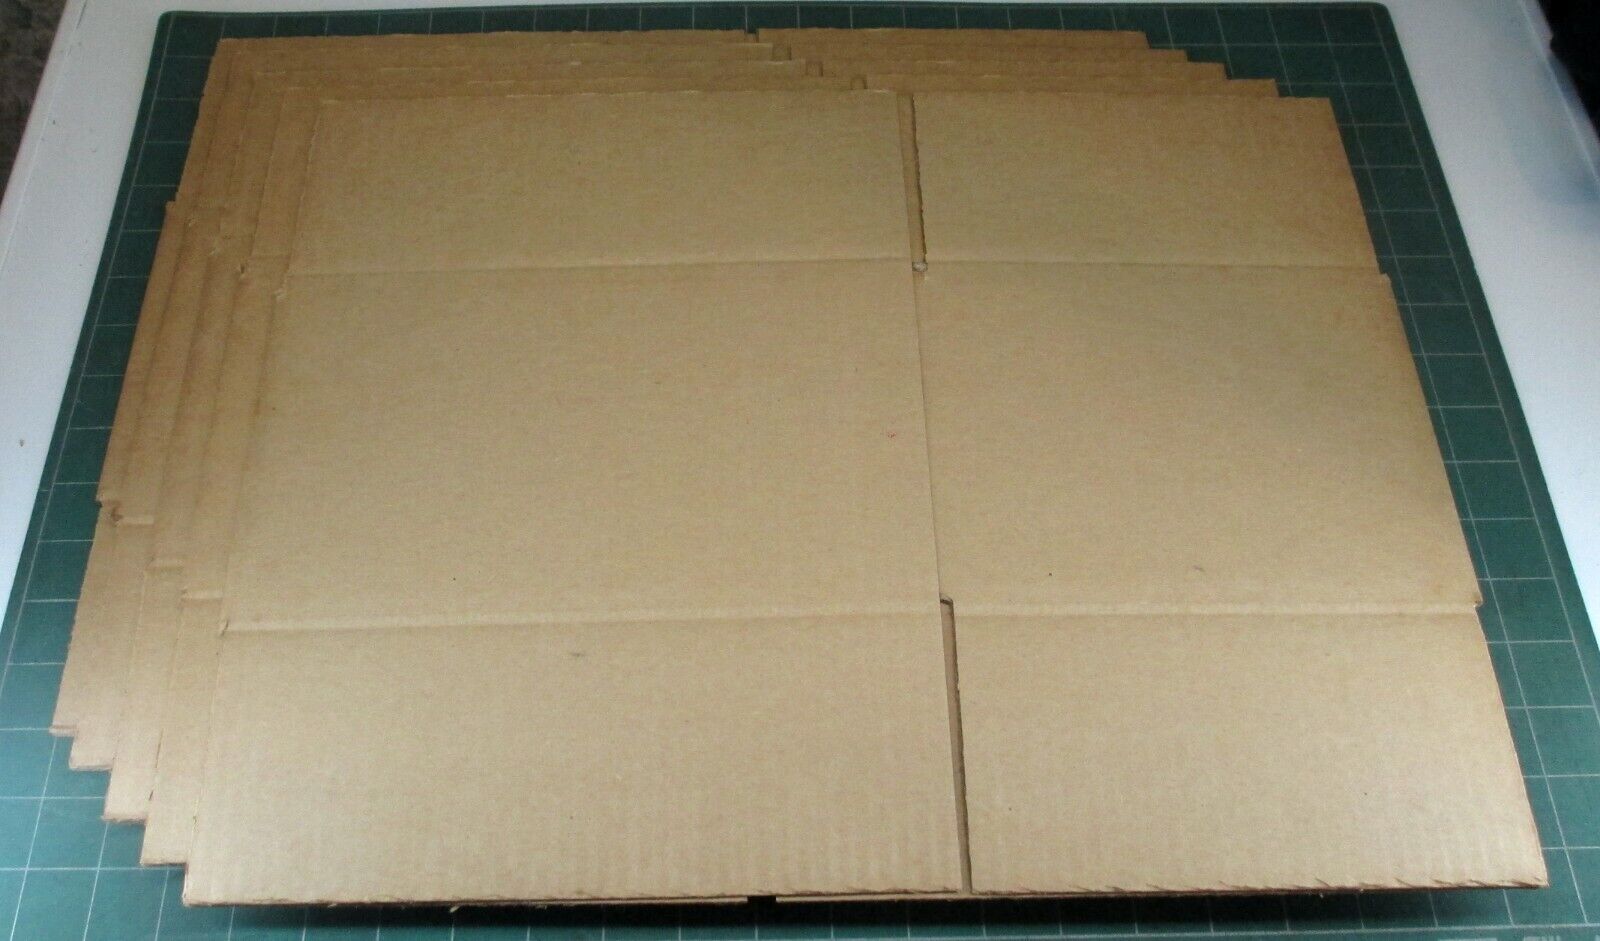 Corrugated cartons/boxes - 10" x 7.5" x 5.5" - qty 5 A & A Apollo Corp WF-2